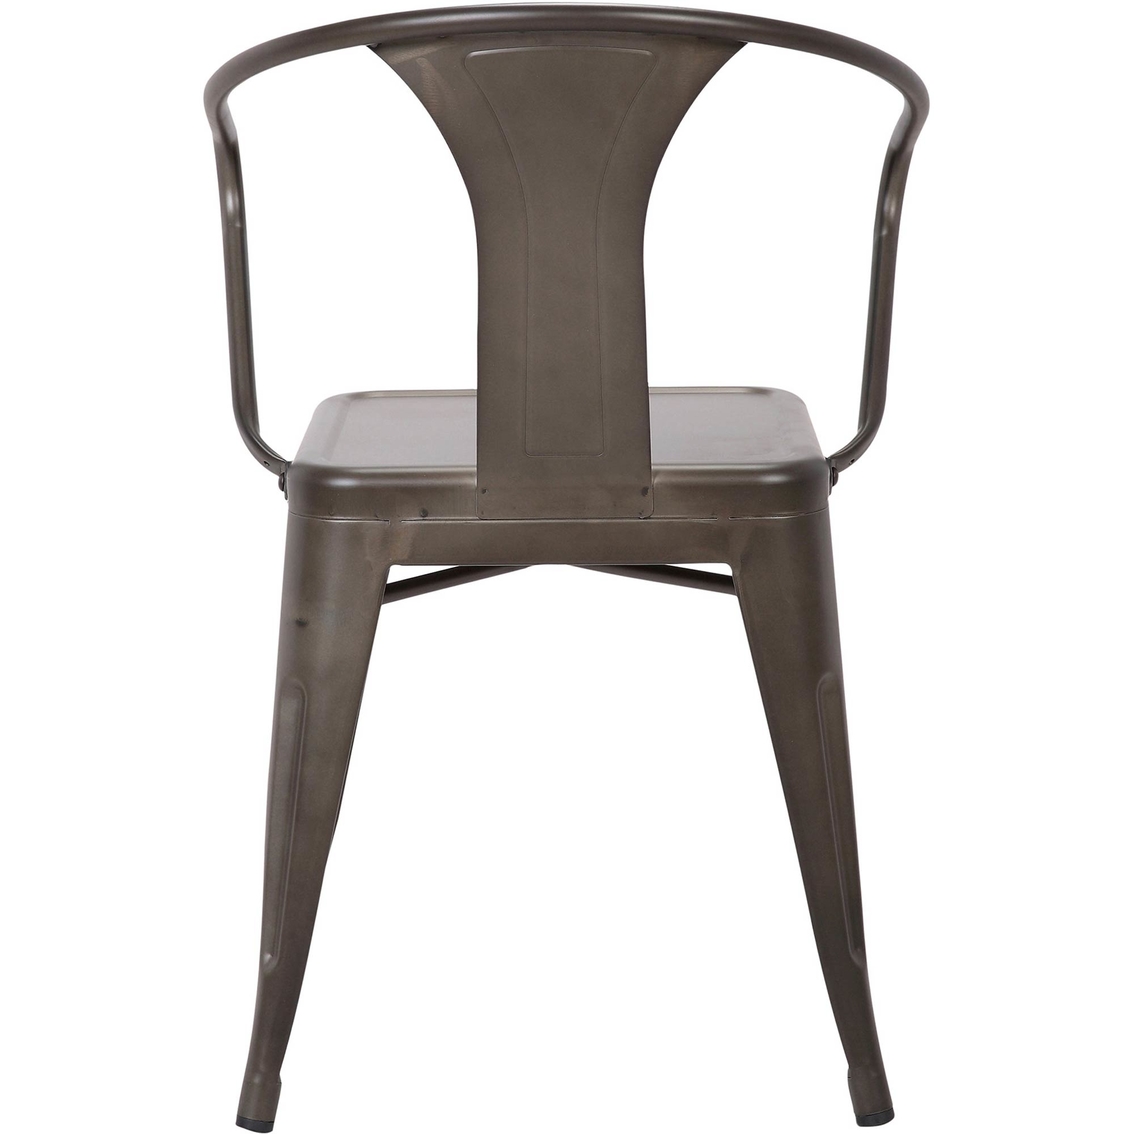 LumiSource Waco Chair 2 pk. - Image 3 of 5